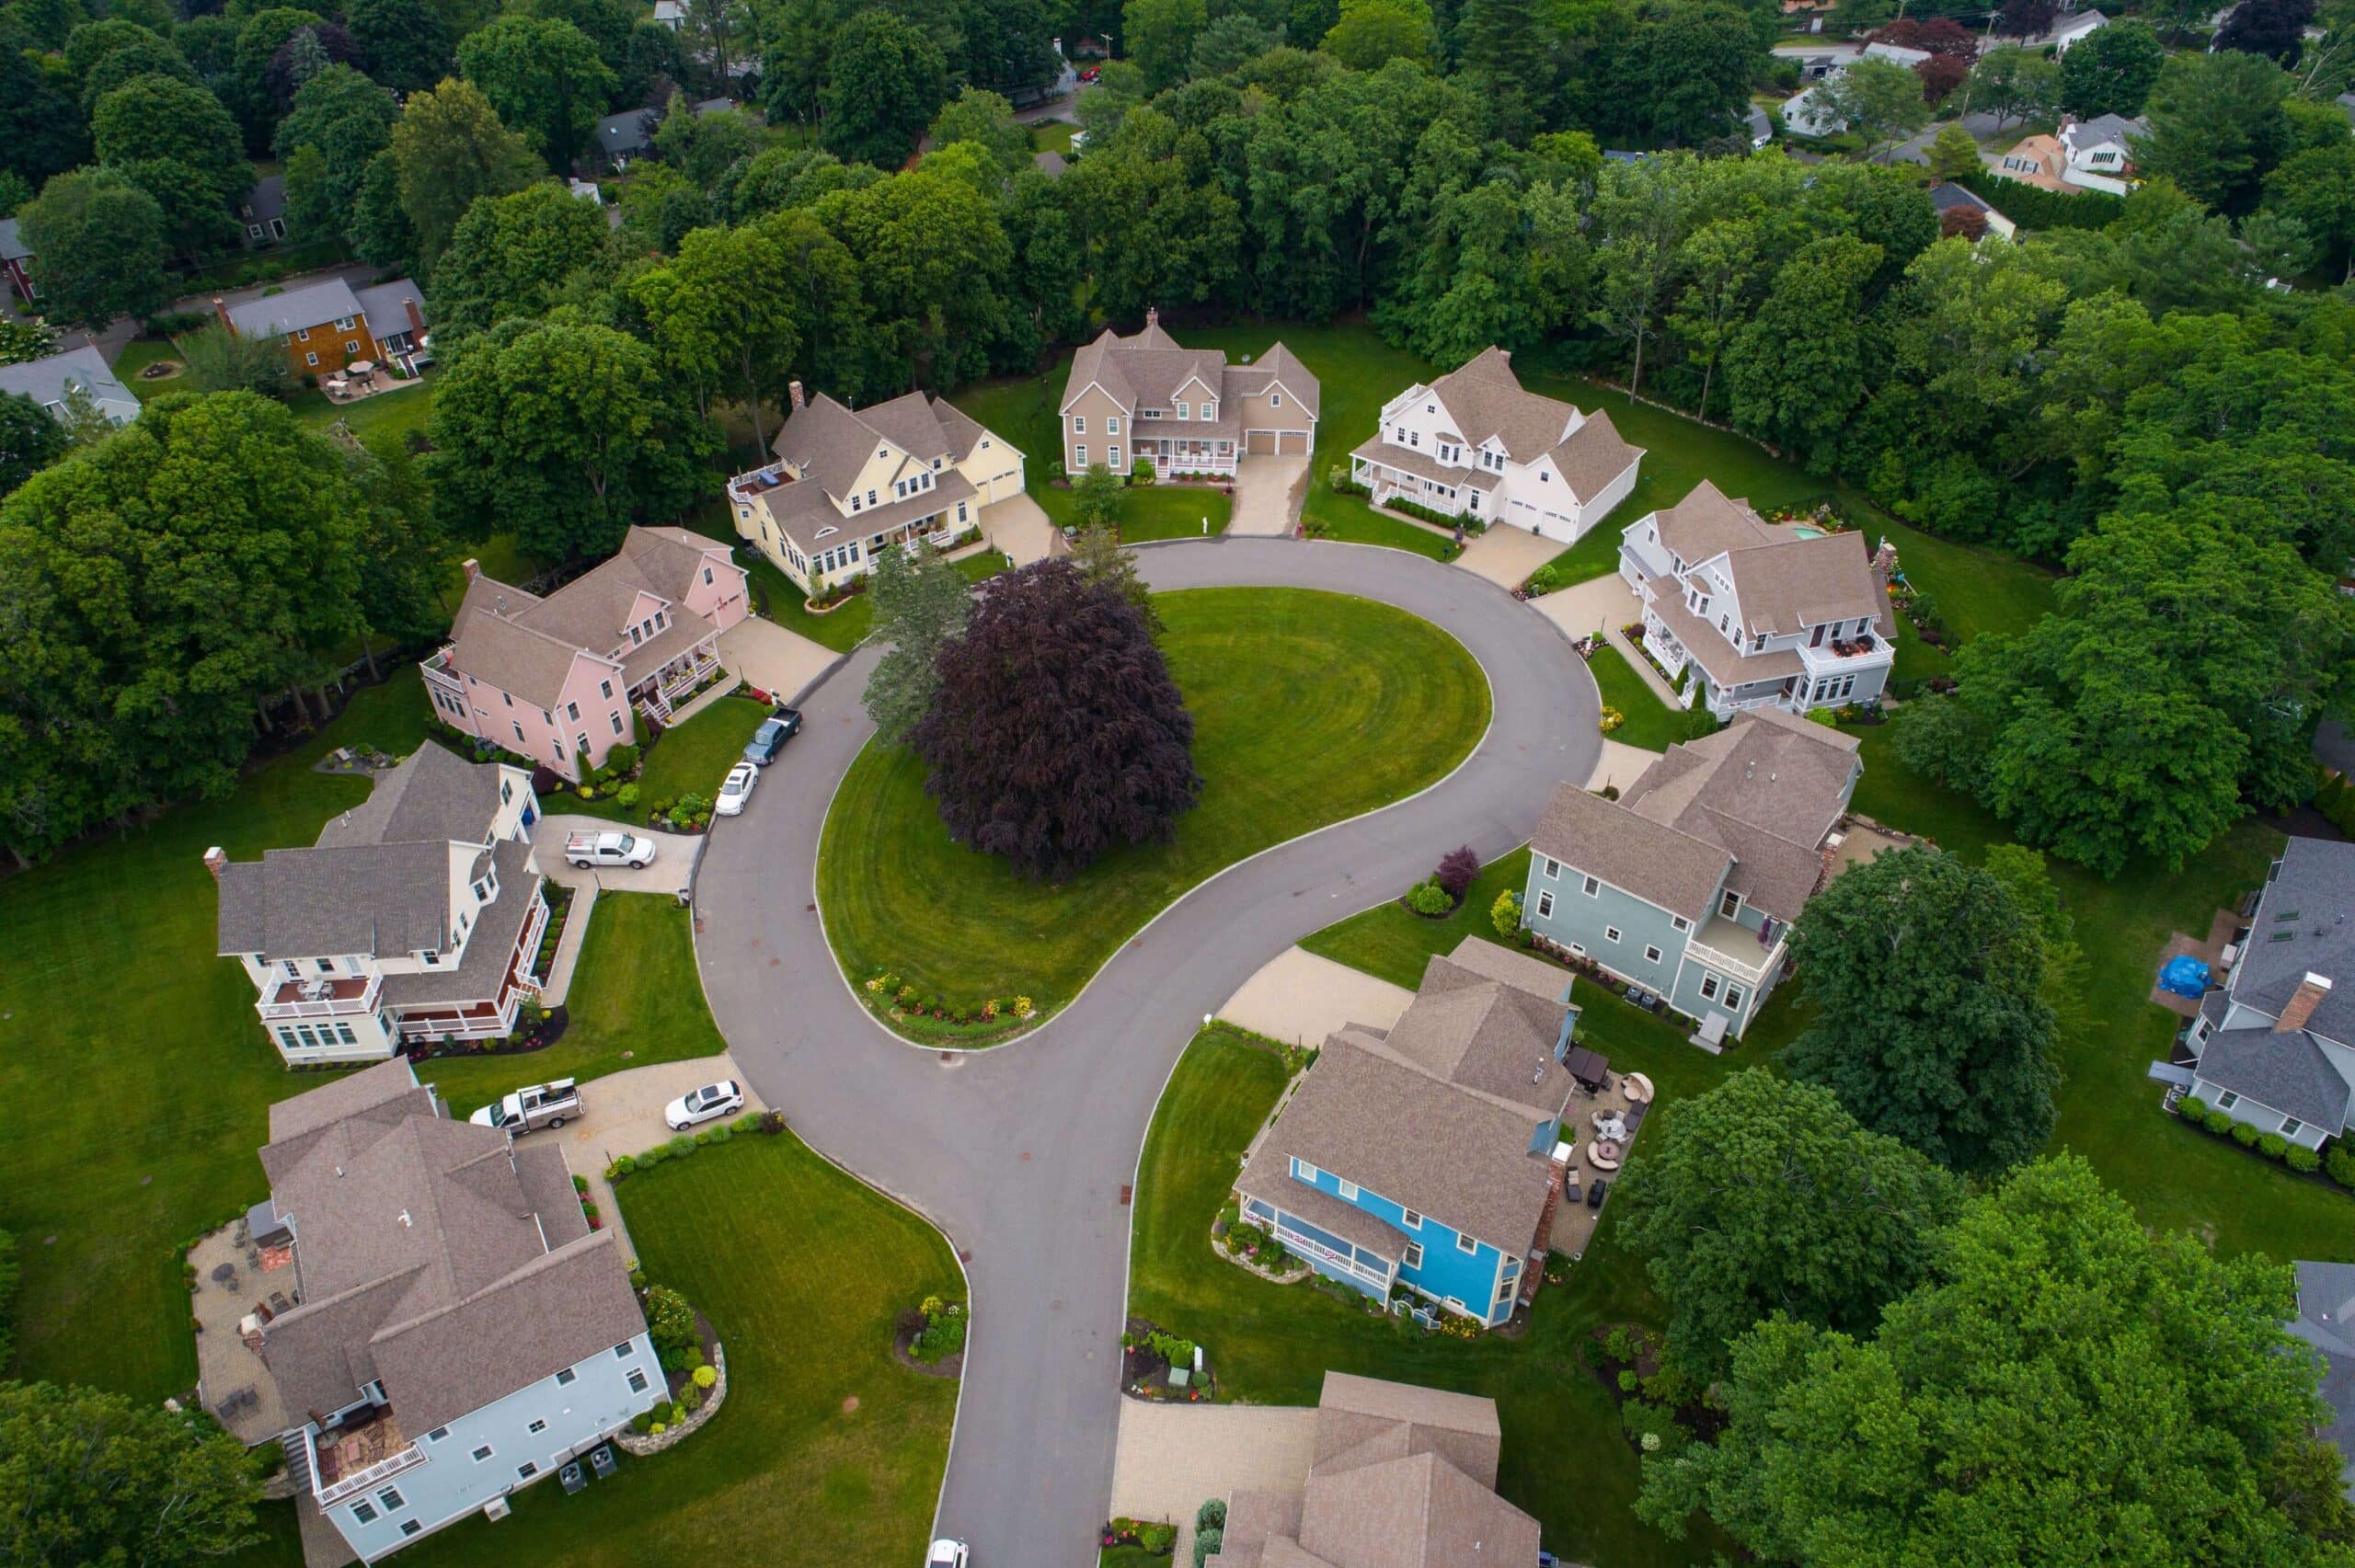 Aerial photograph of a residential cul-de-sac